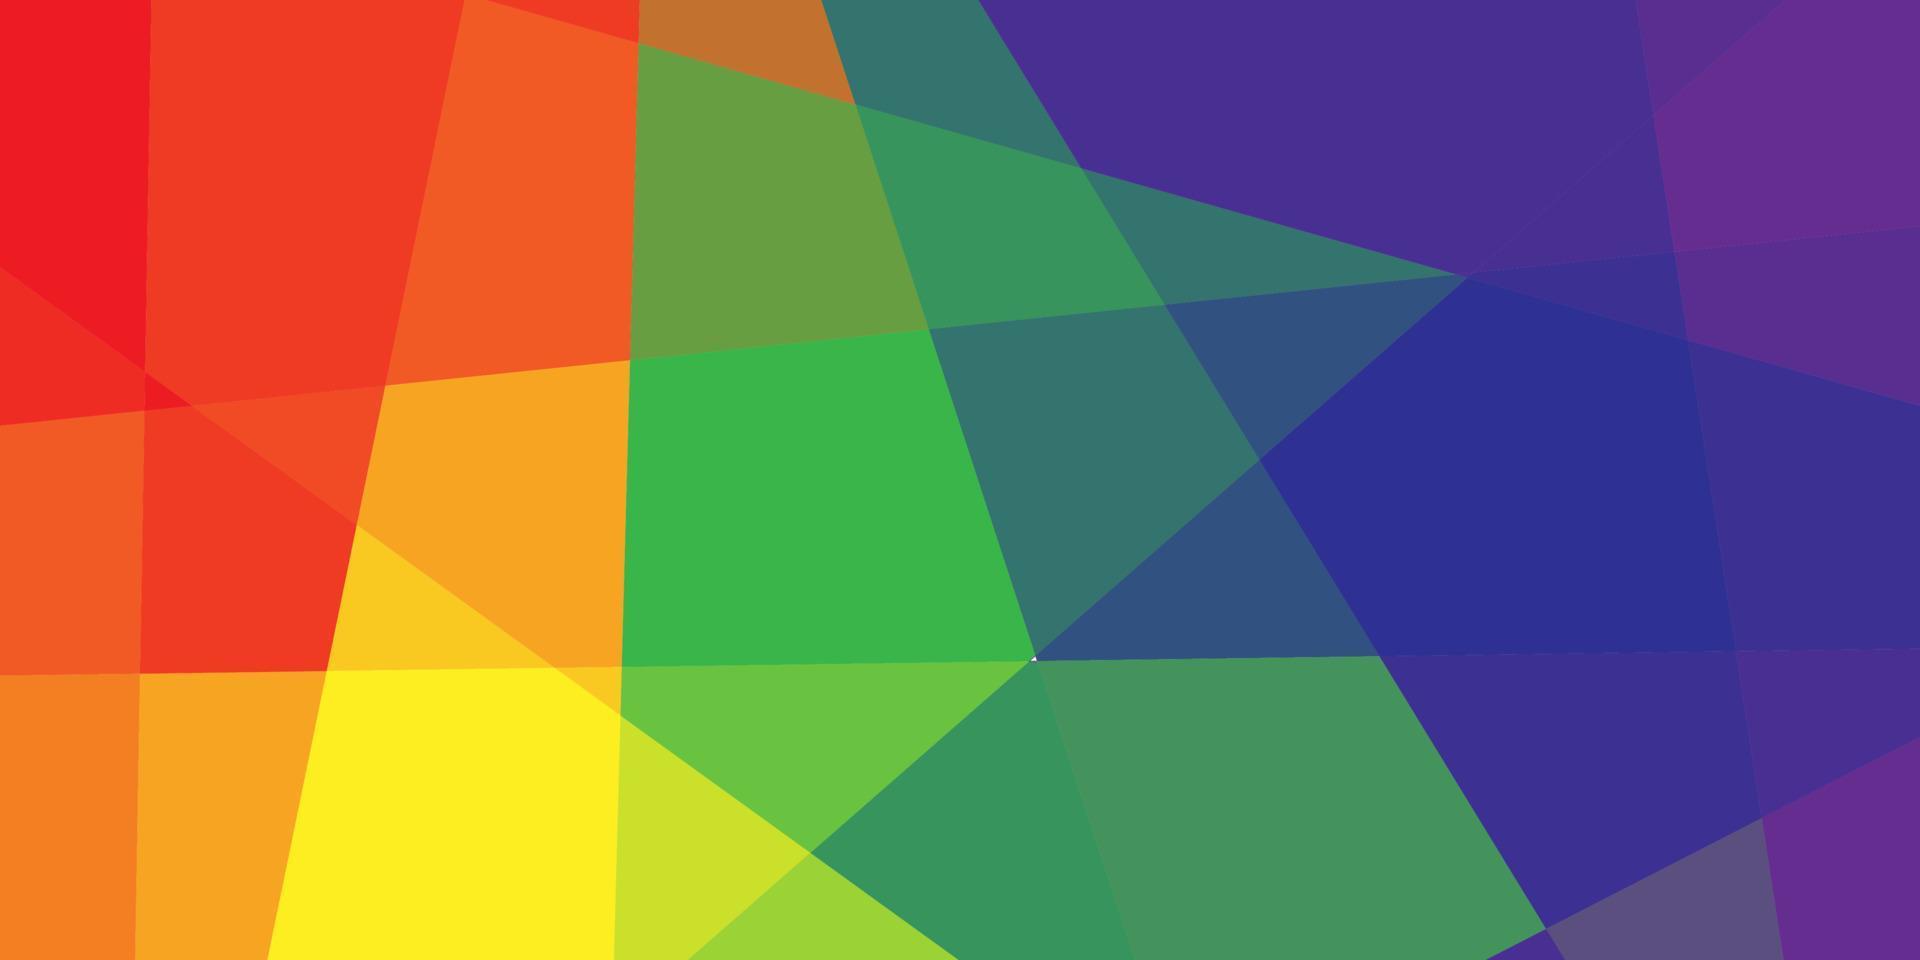 regnbåge abstrakt bakgrund. färgglad mosaik geometrisk lgbt flagga. vektor illustration.